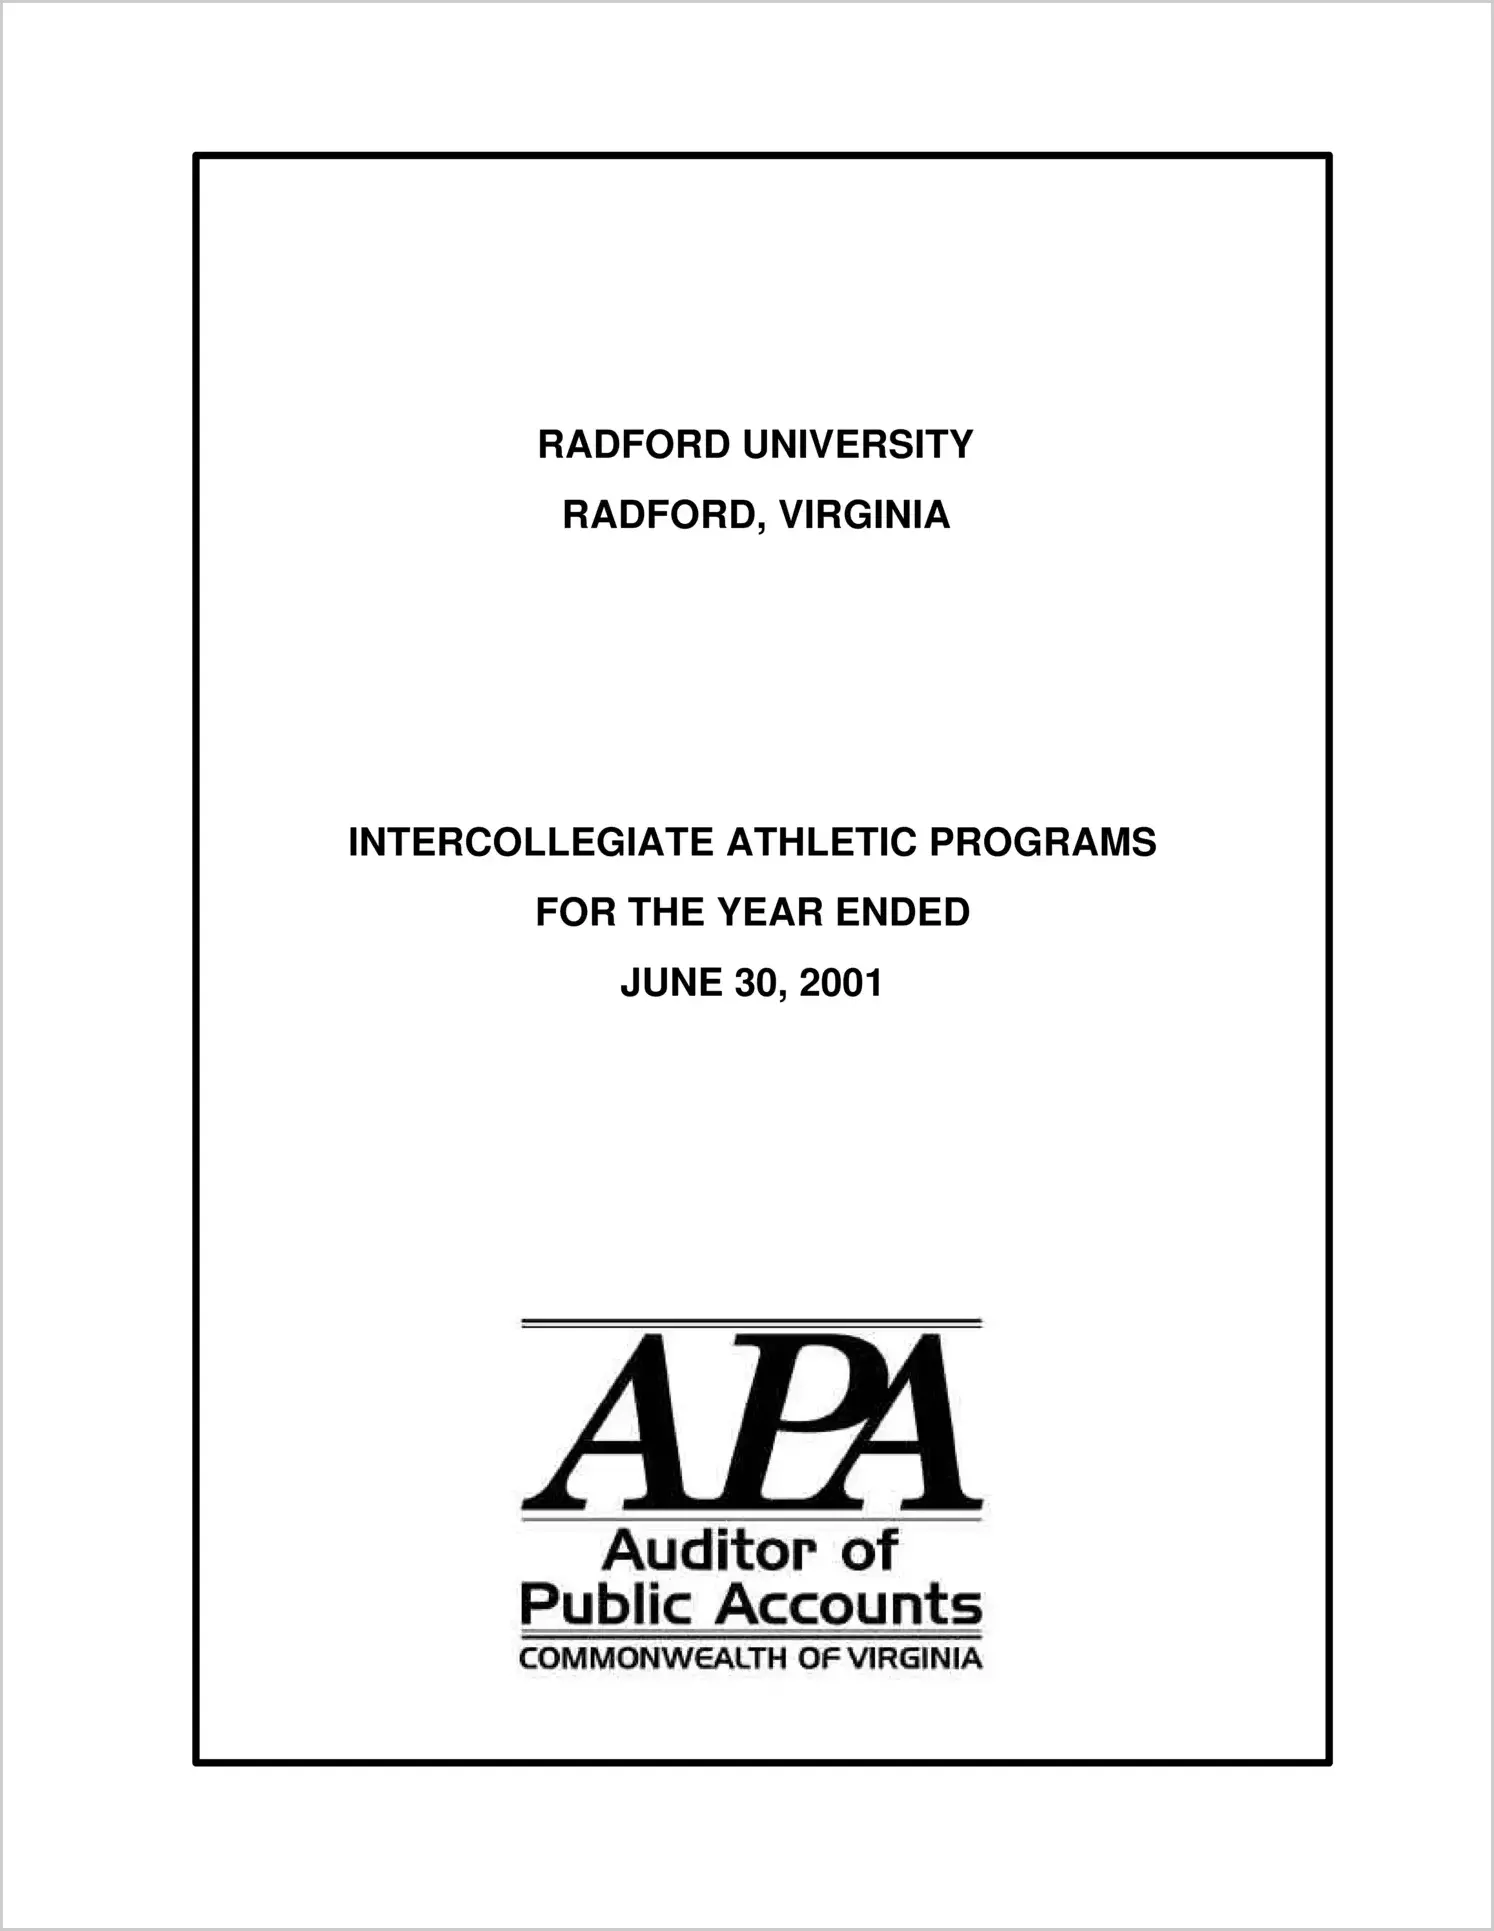 Radford University Intercollegiate Athletic Programs for the year ended June 30, 2001